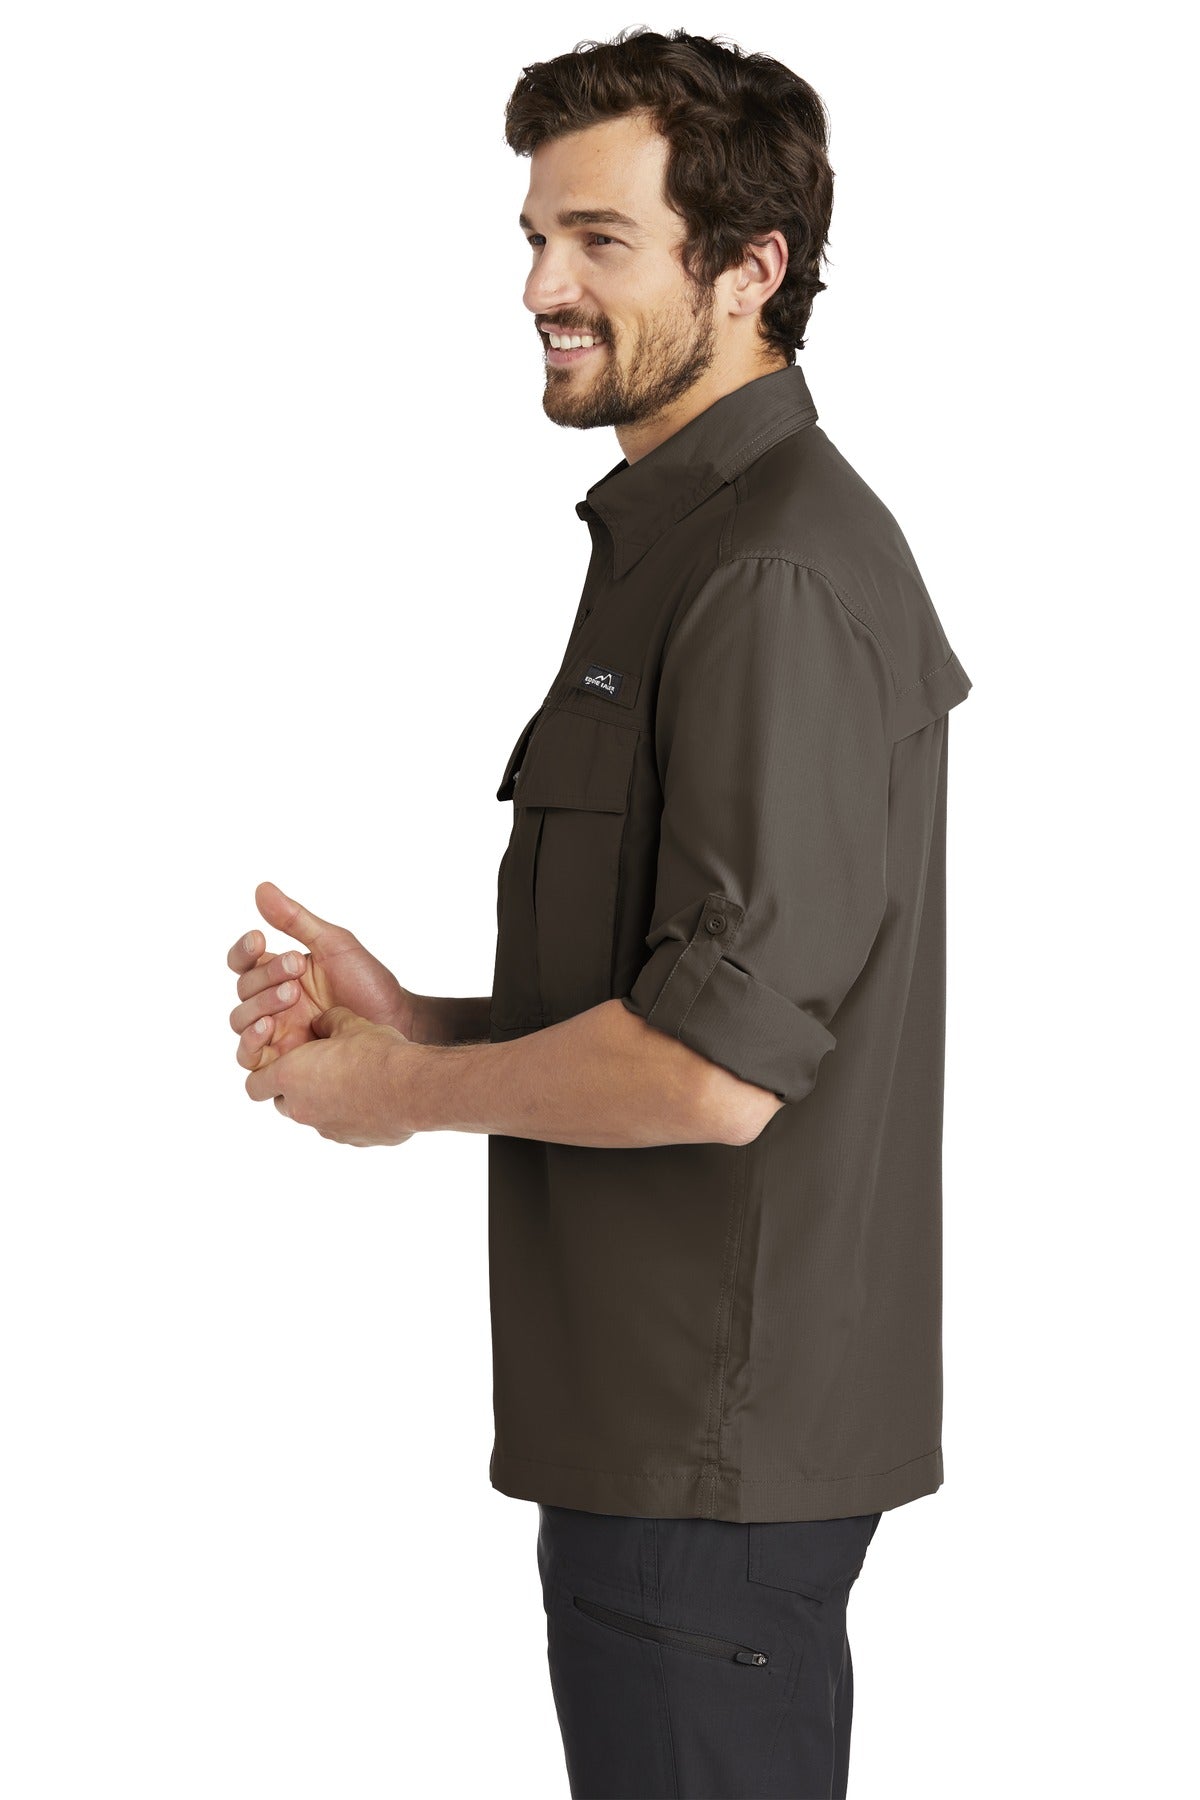 Eddie Bauer® - Long Sleeve Performance Fishing Shirt. EB600 - DFW Impression